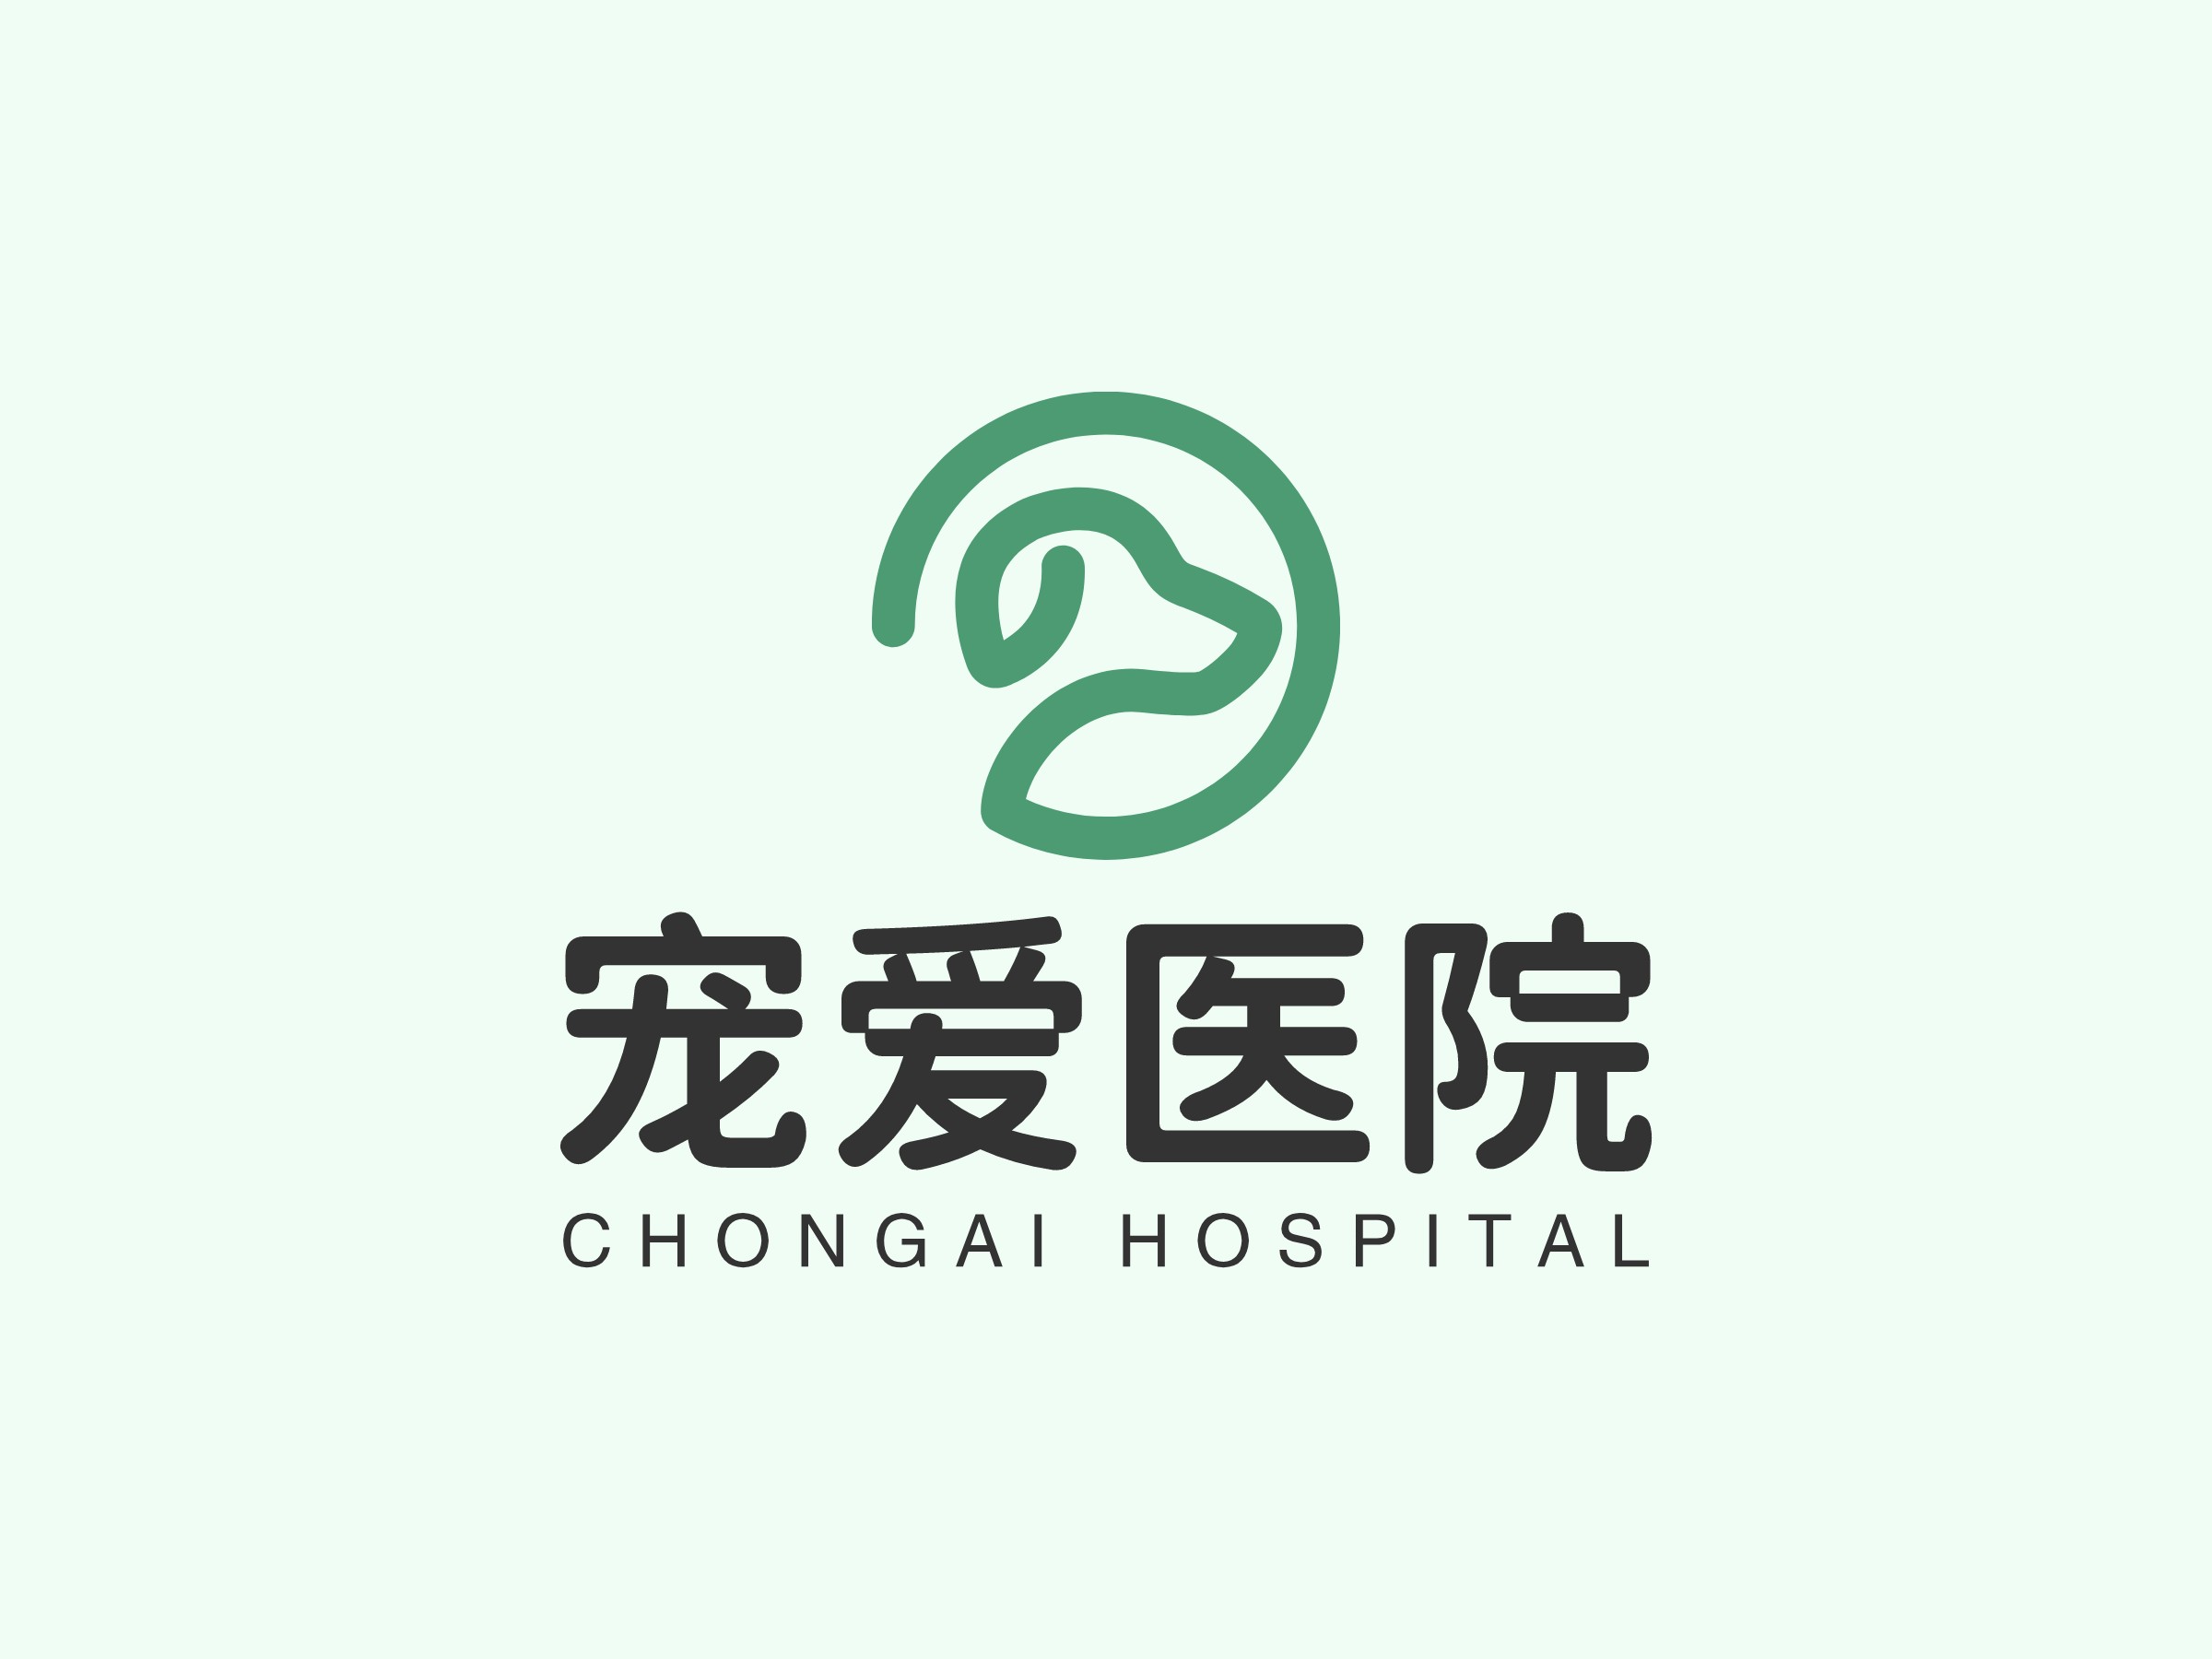 宠爱医院 - Chongai Hospital